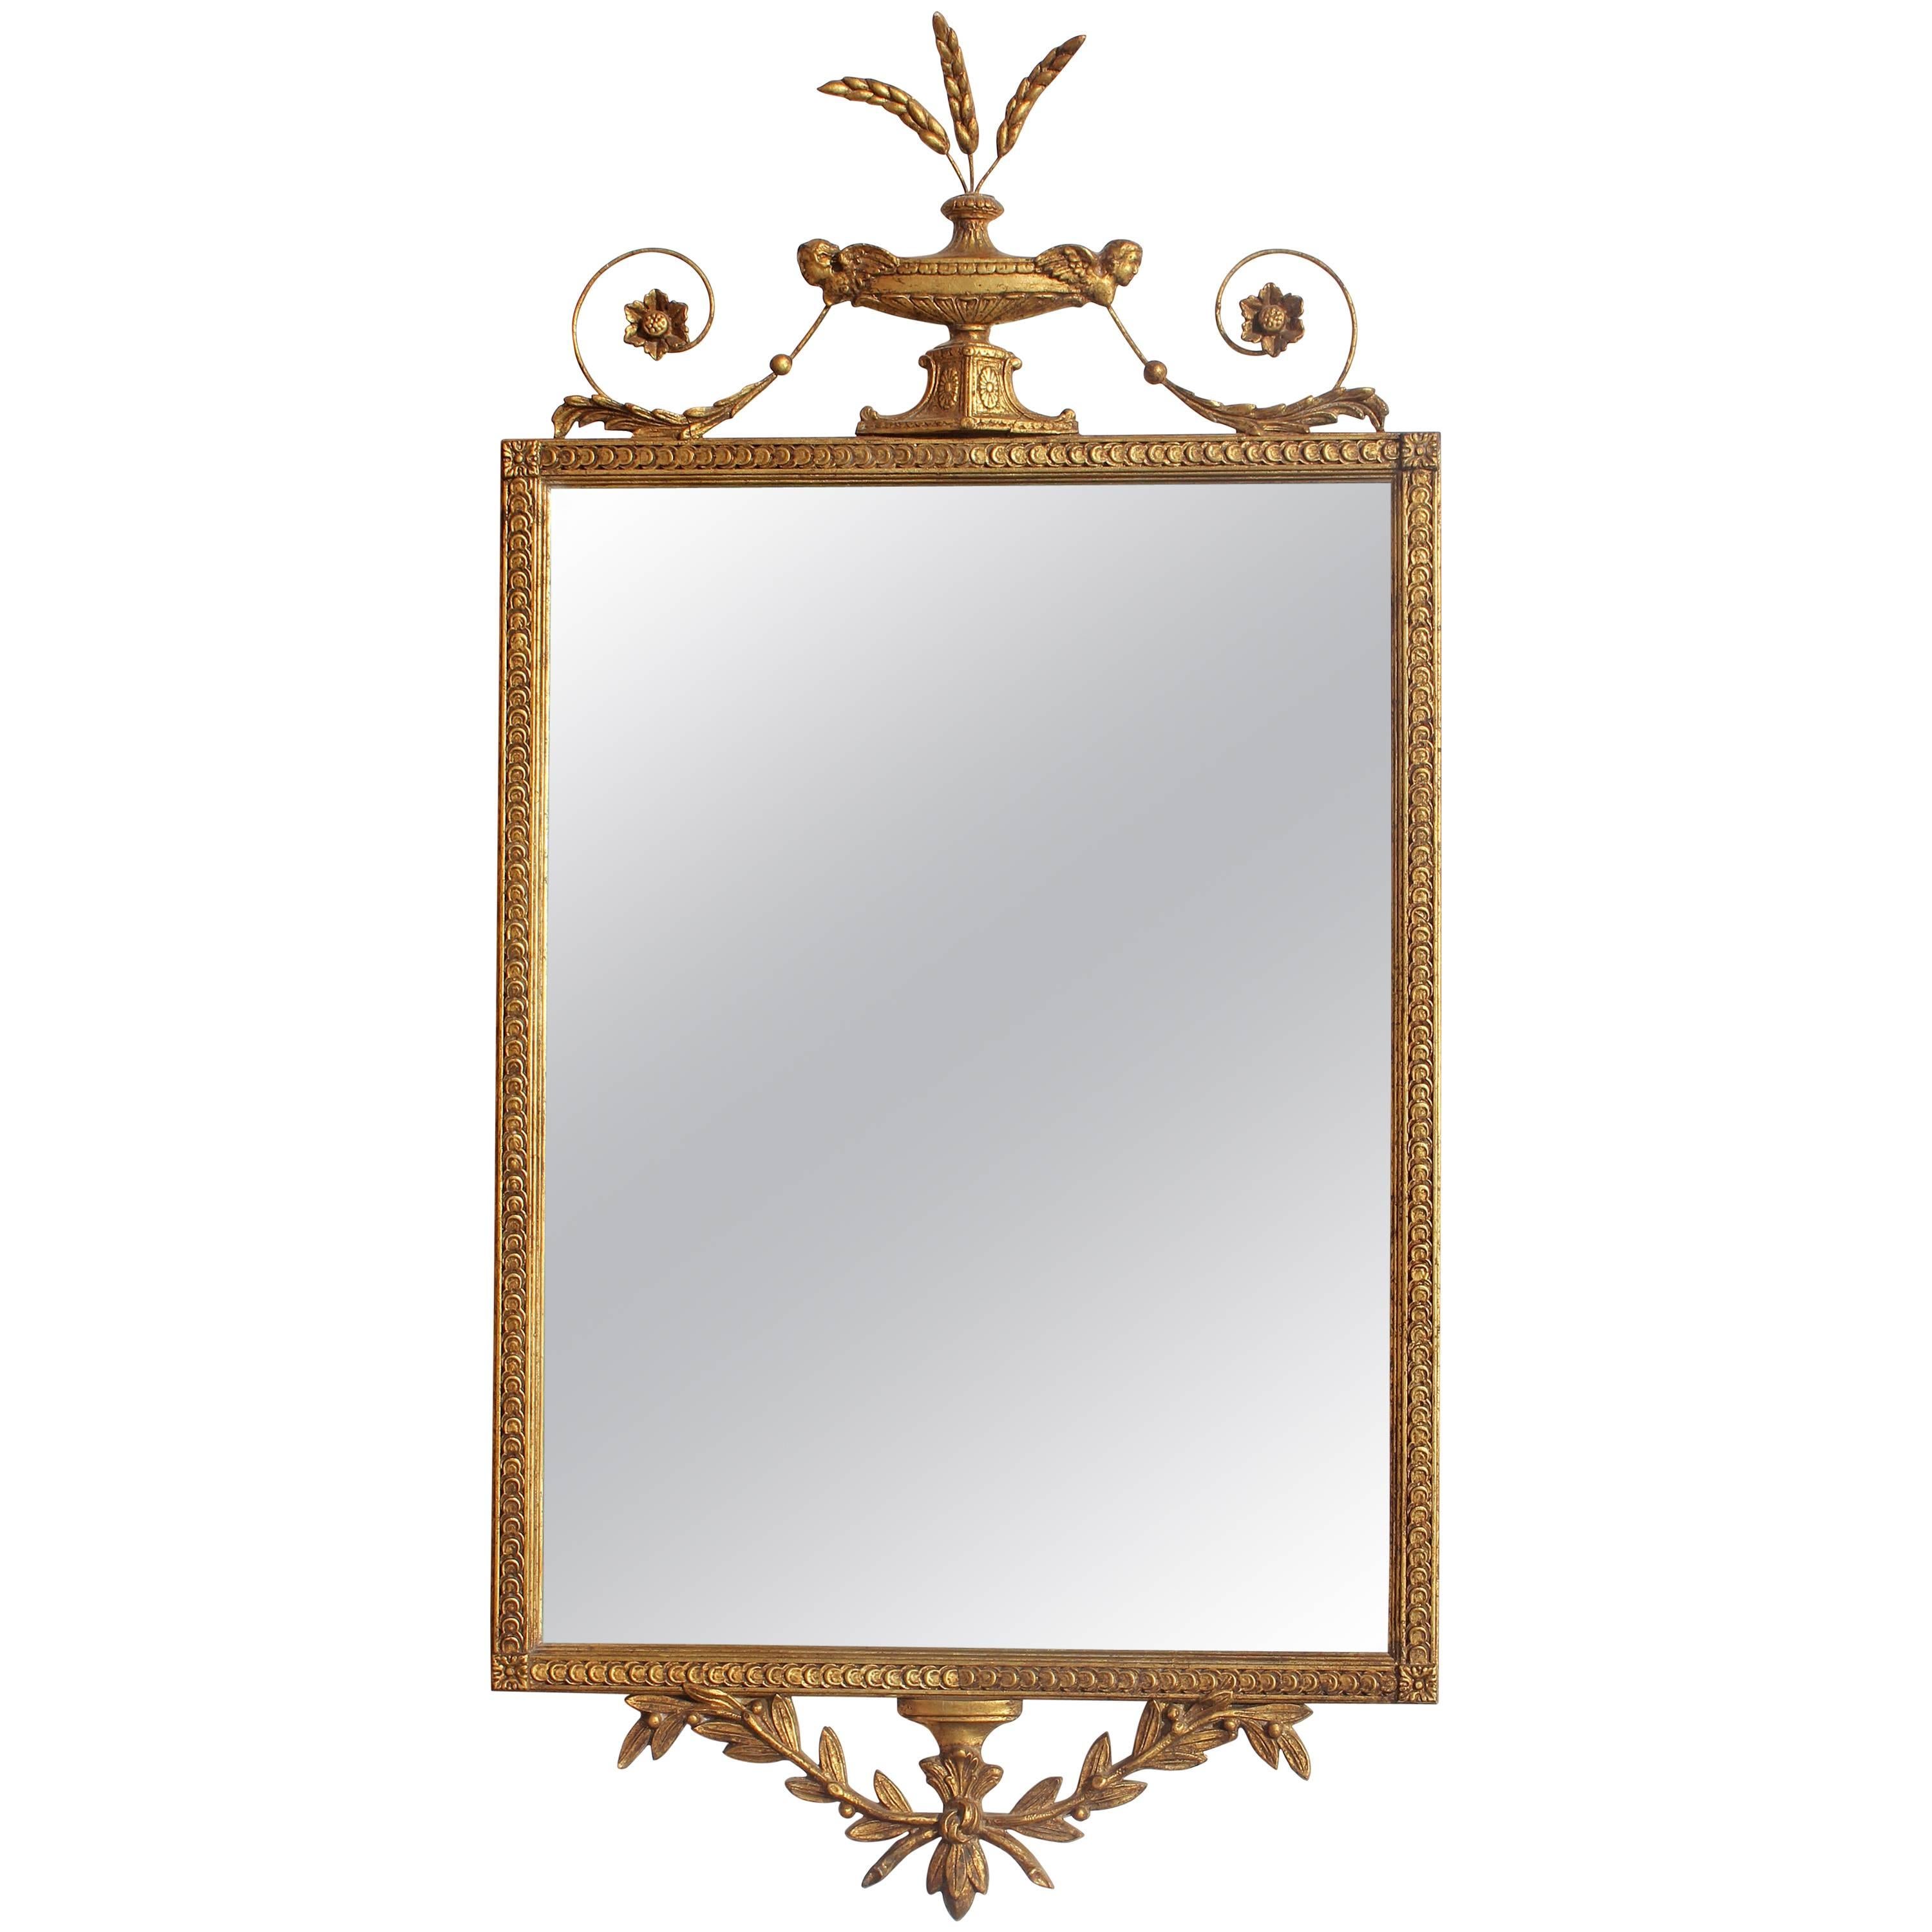 George III Adams Style Gilt Mirror